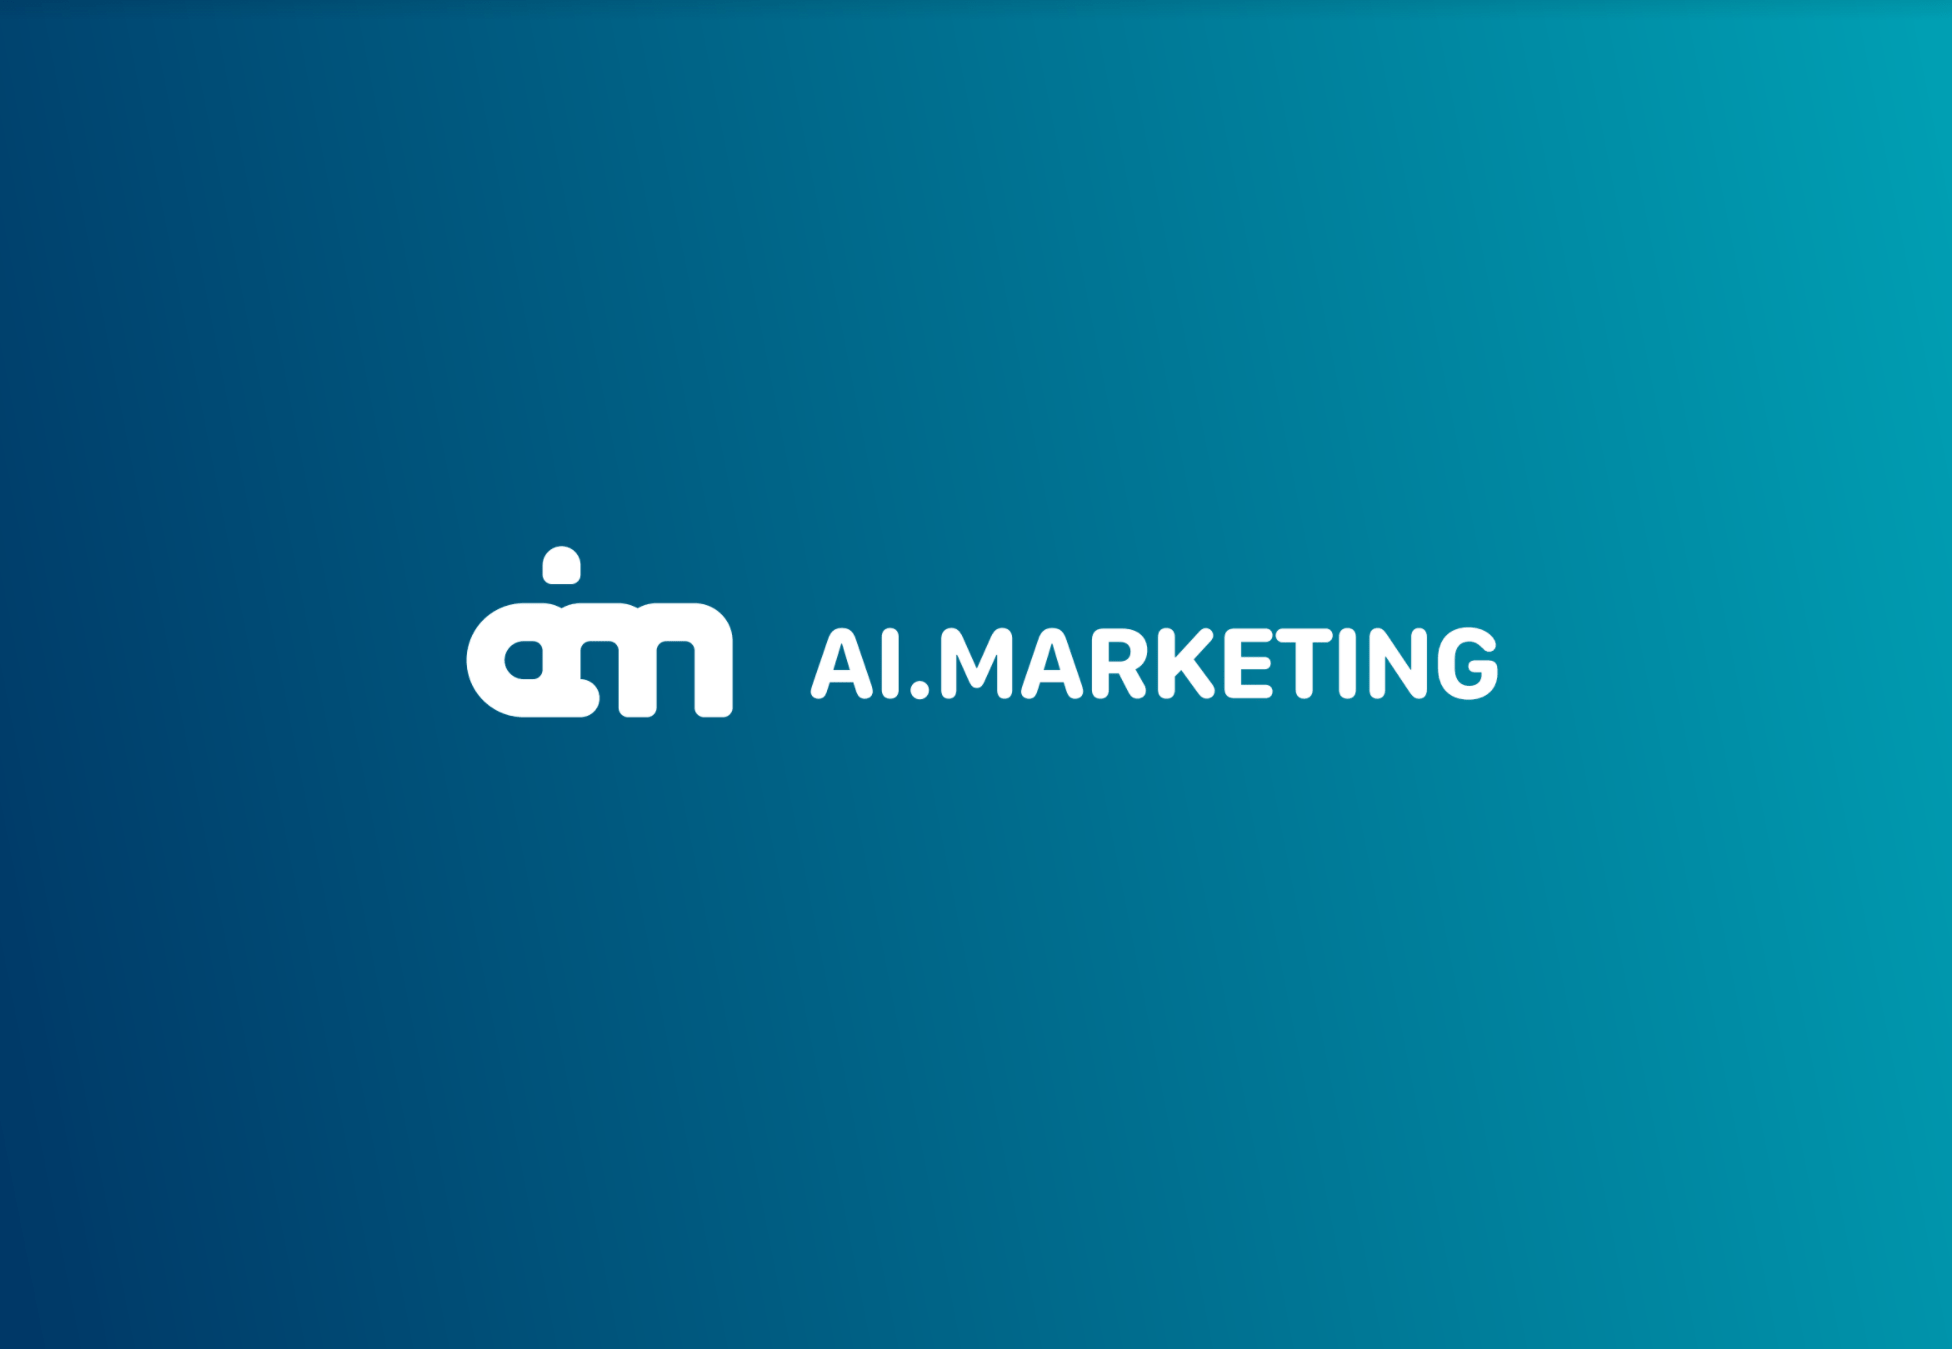 AI Marketing – A sustainable online money-making platform